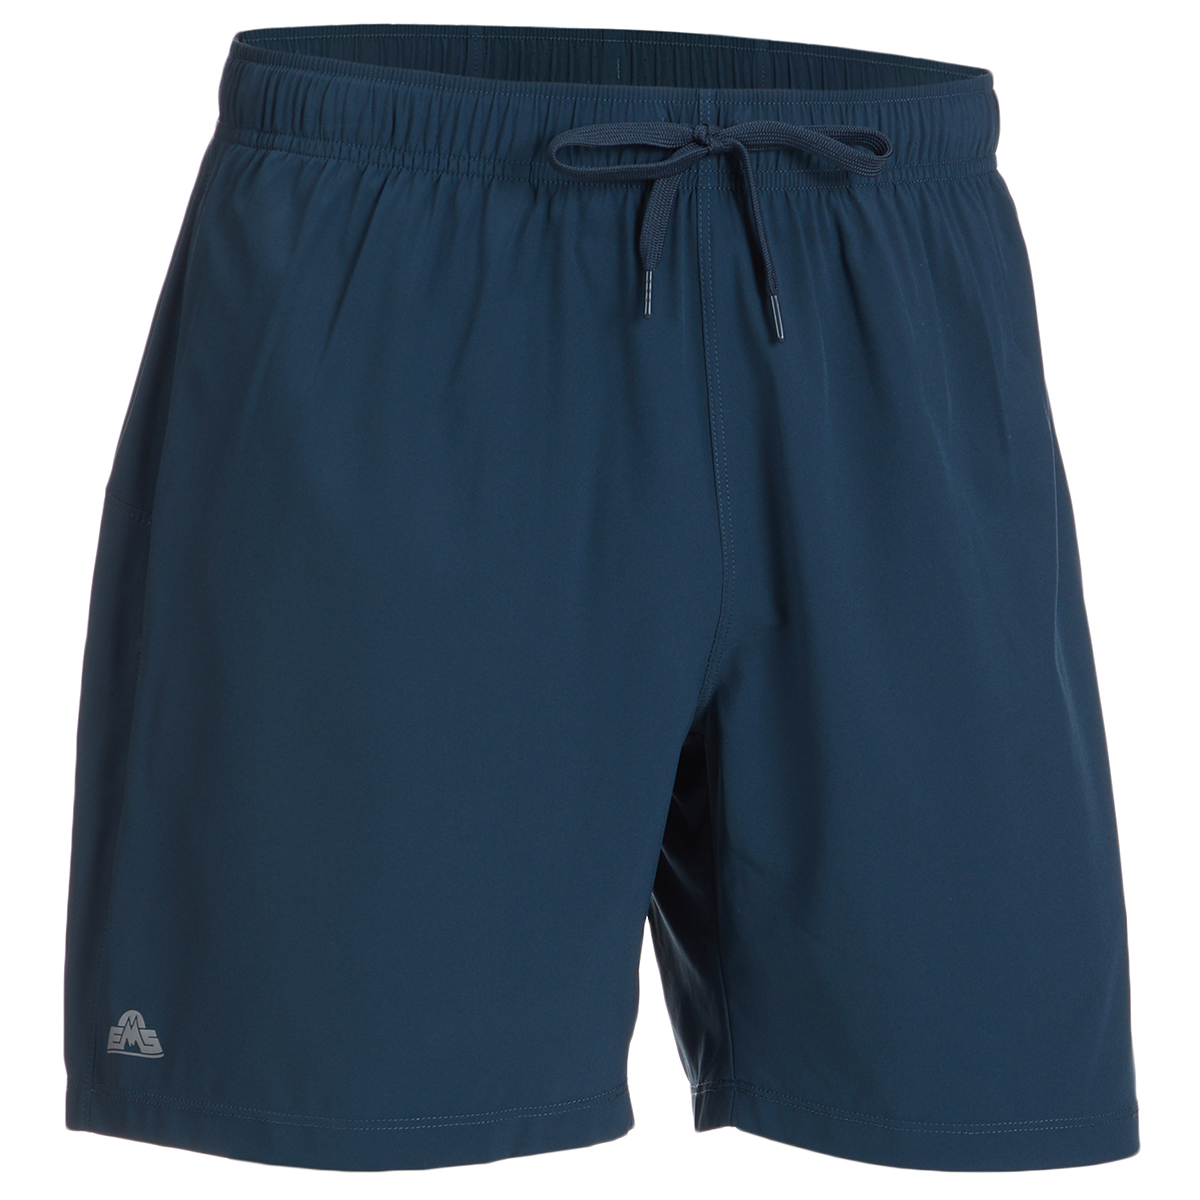 EMS Men's Elemental Active Shorts - Size XL